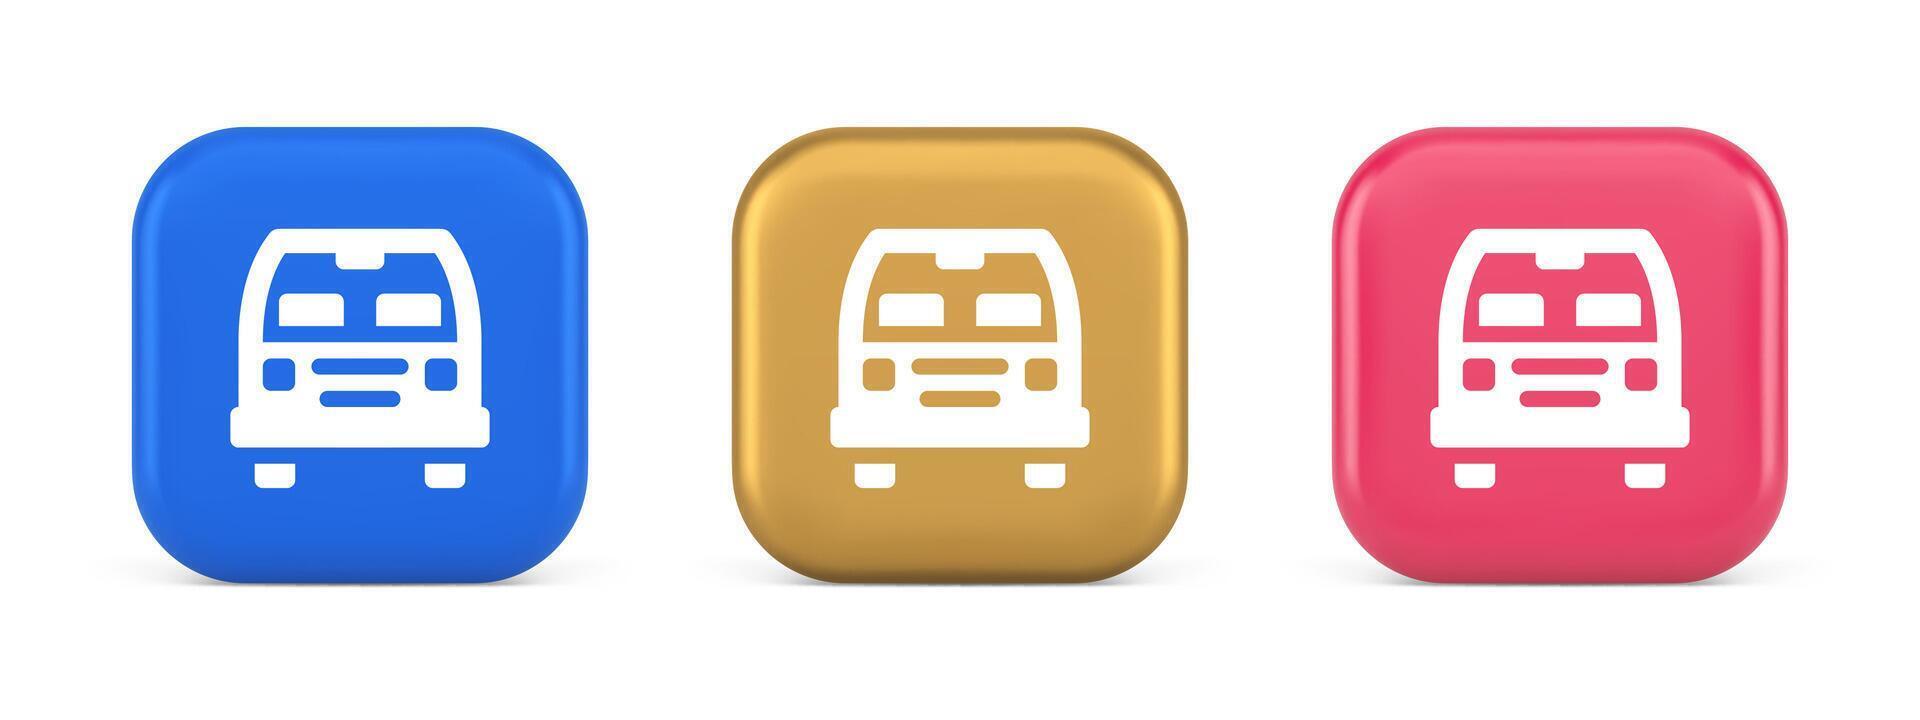 Bus Automobil Passagier Transport Taste Stadt Transfer Reise 3d realistisch Symbol vektor